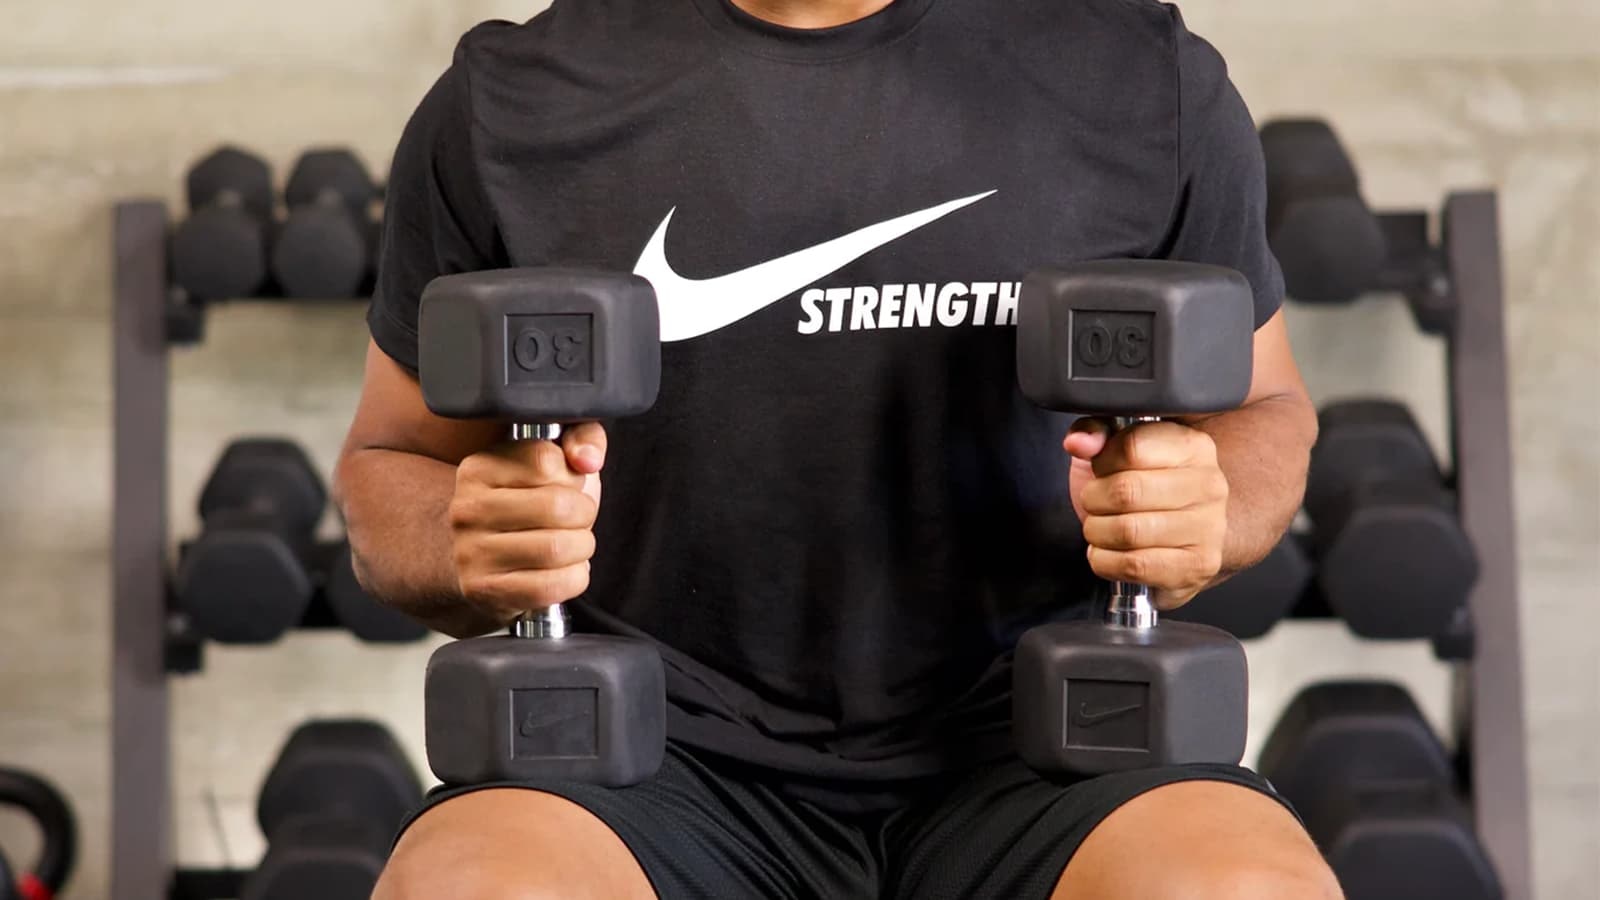 Nike Strength Gym Equipment